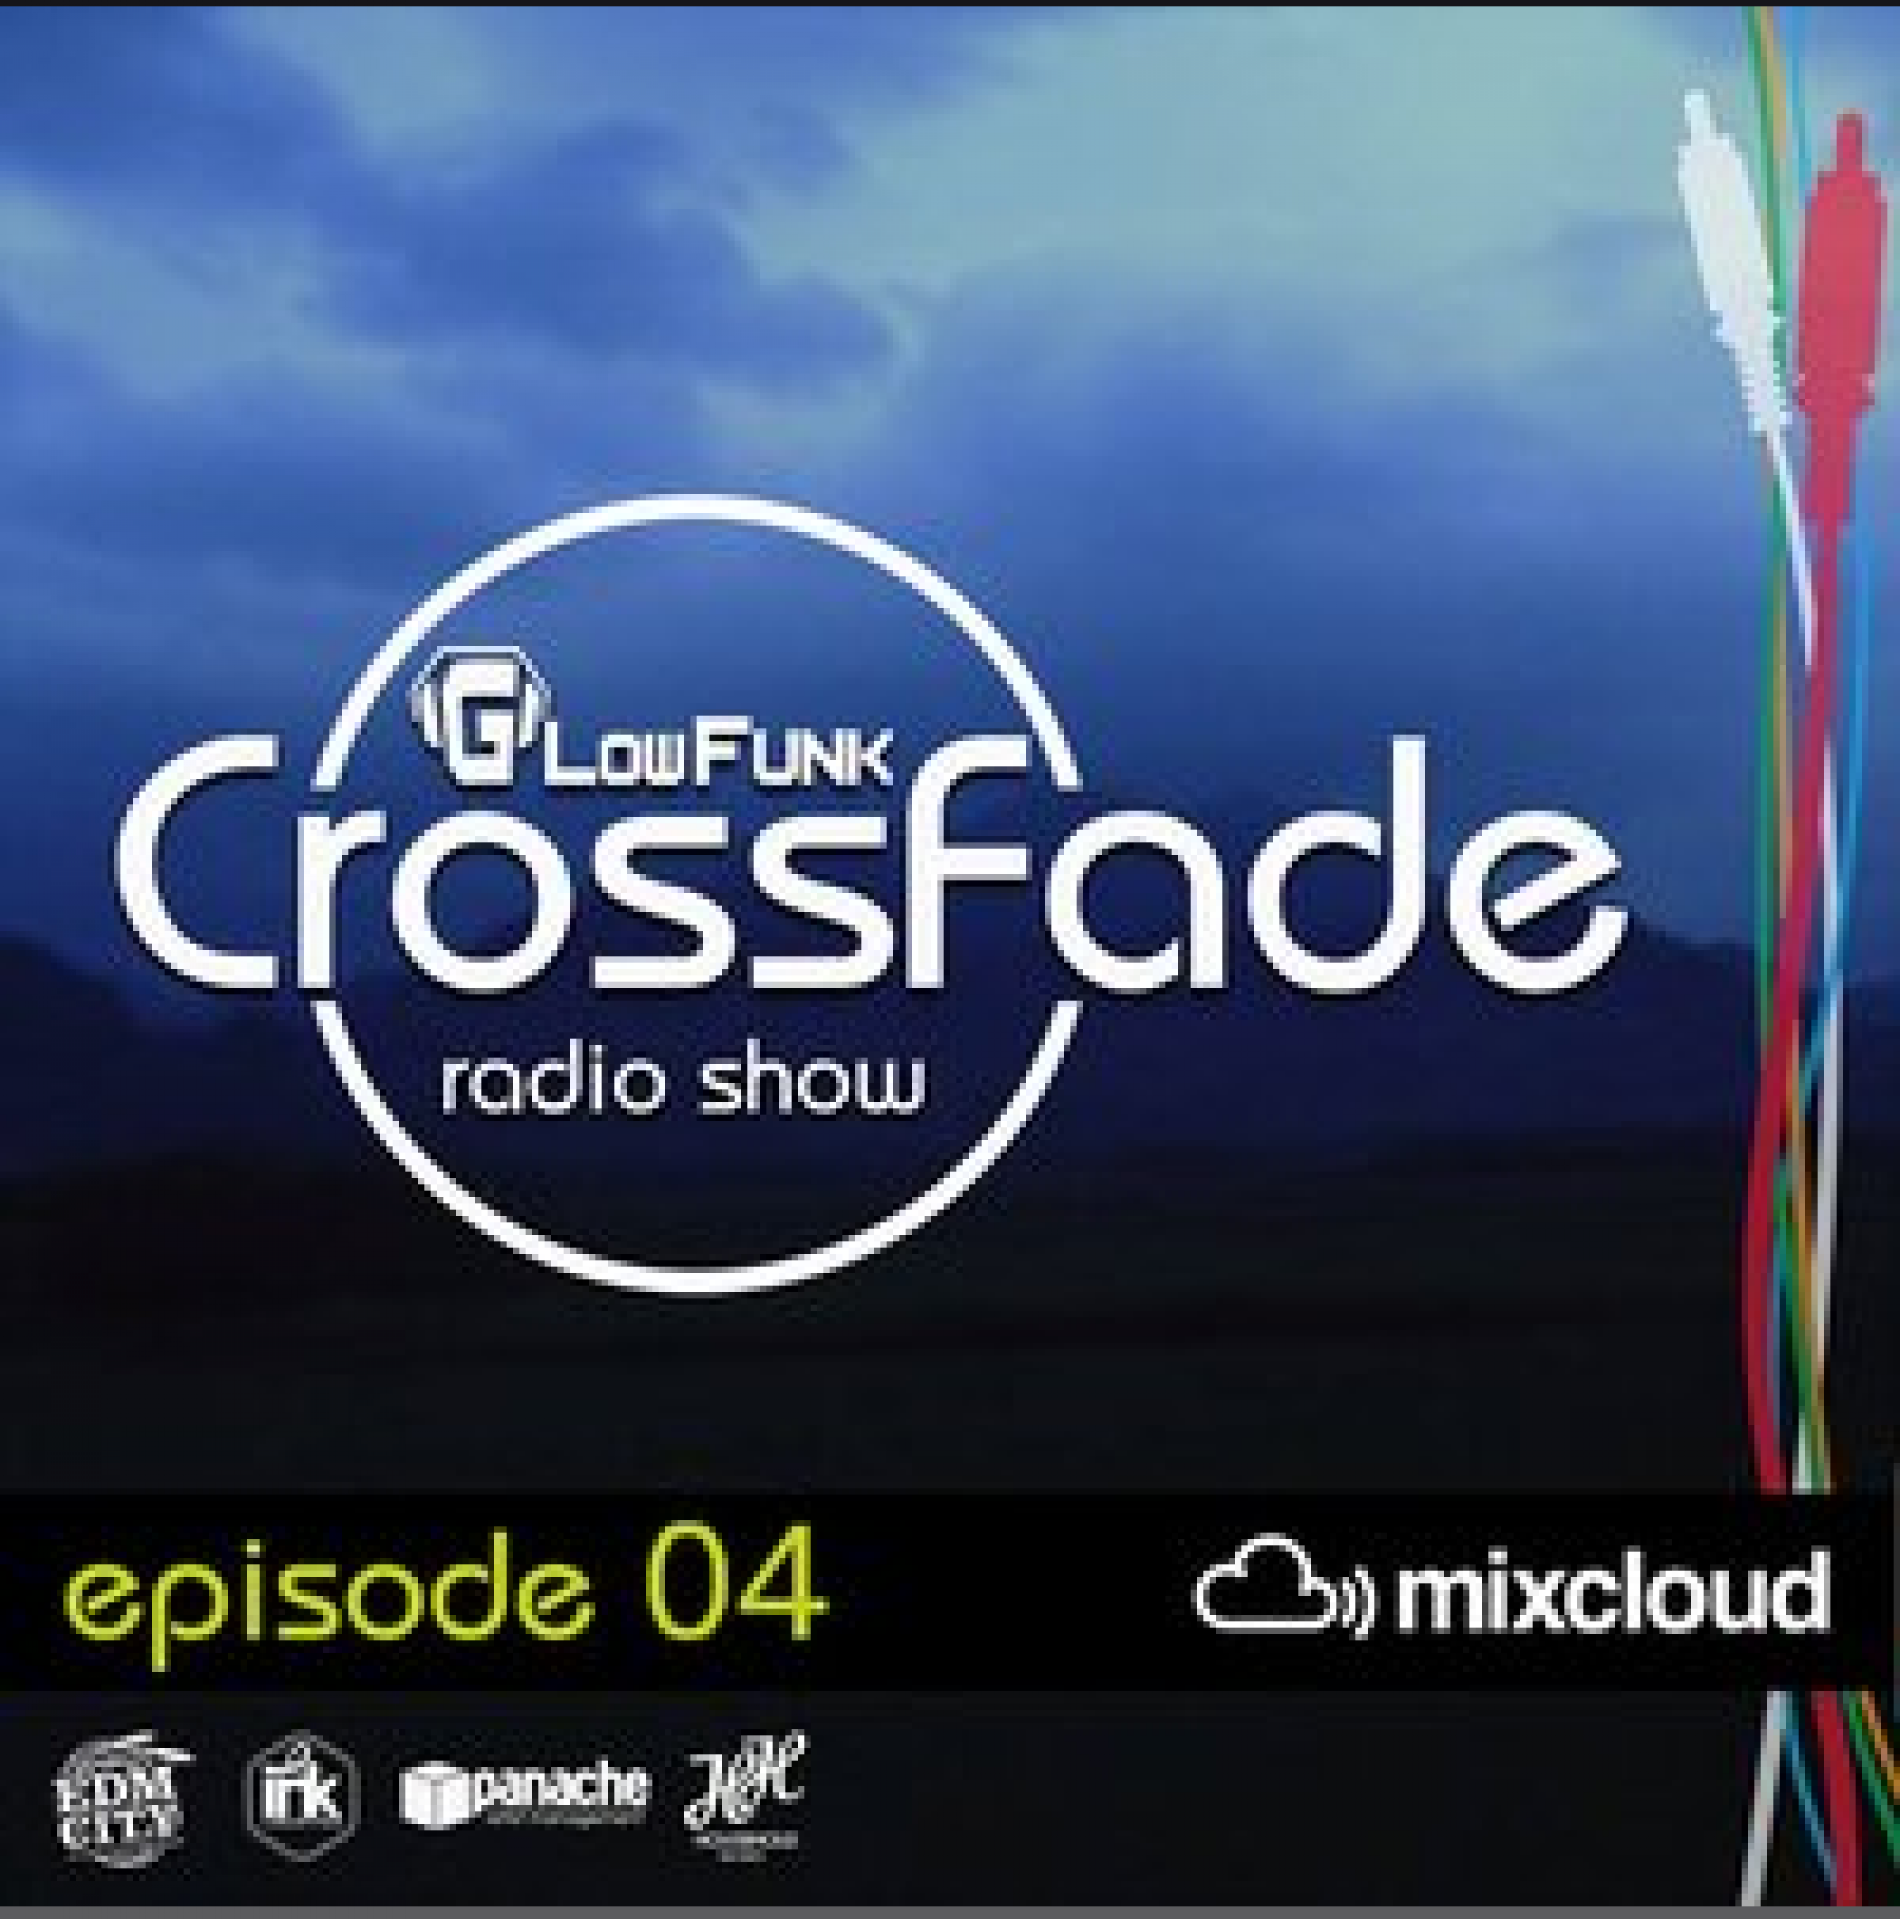 Glowfunk : Crossfade Radio Show #004